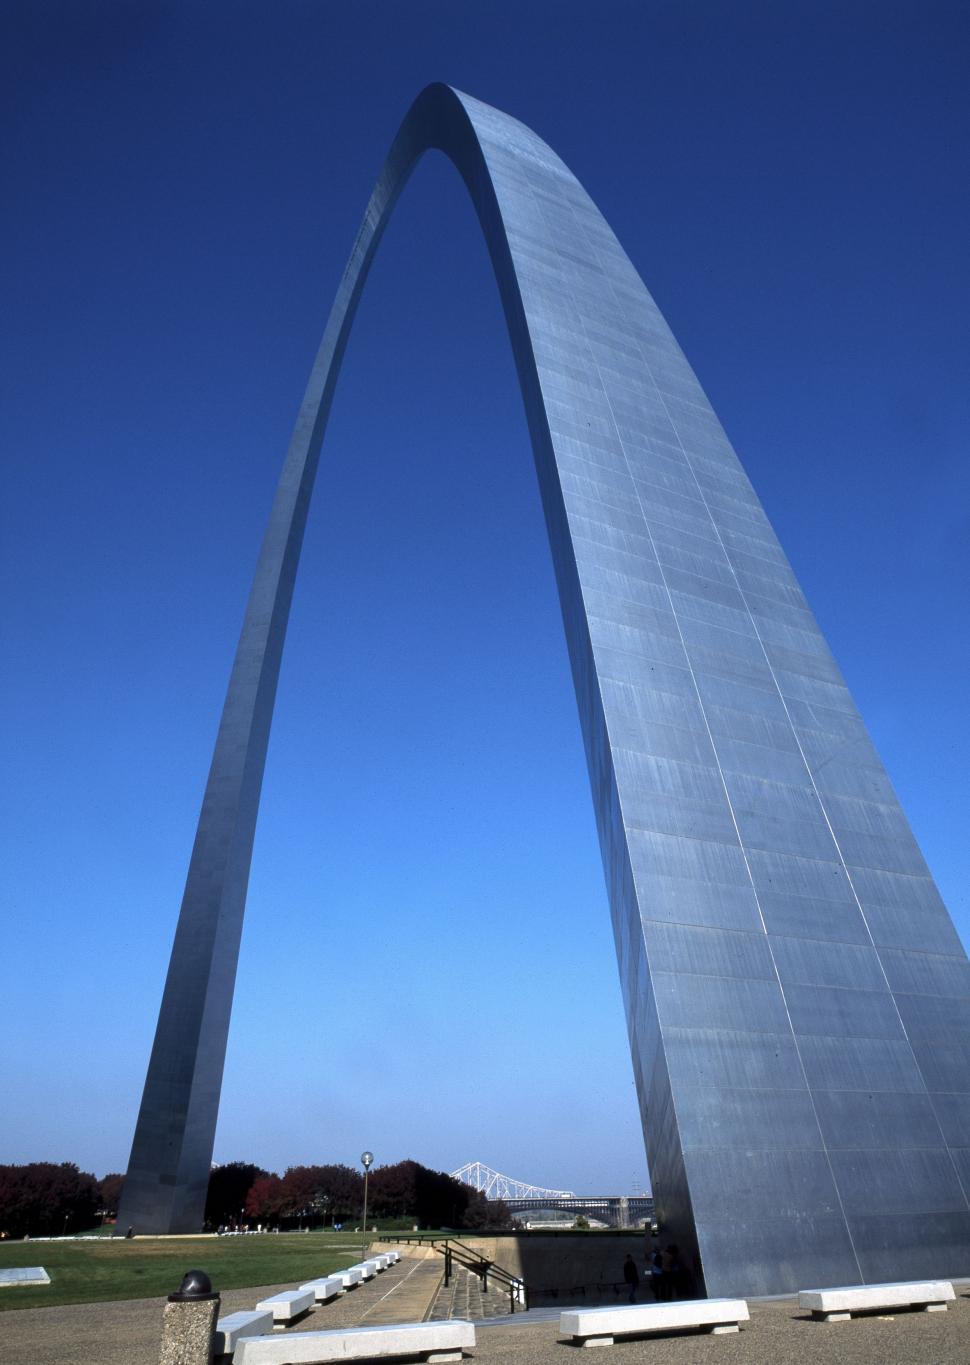 Free Image of St Louis Arc 